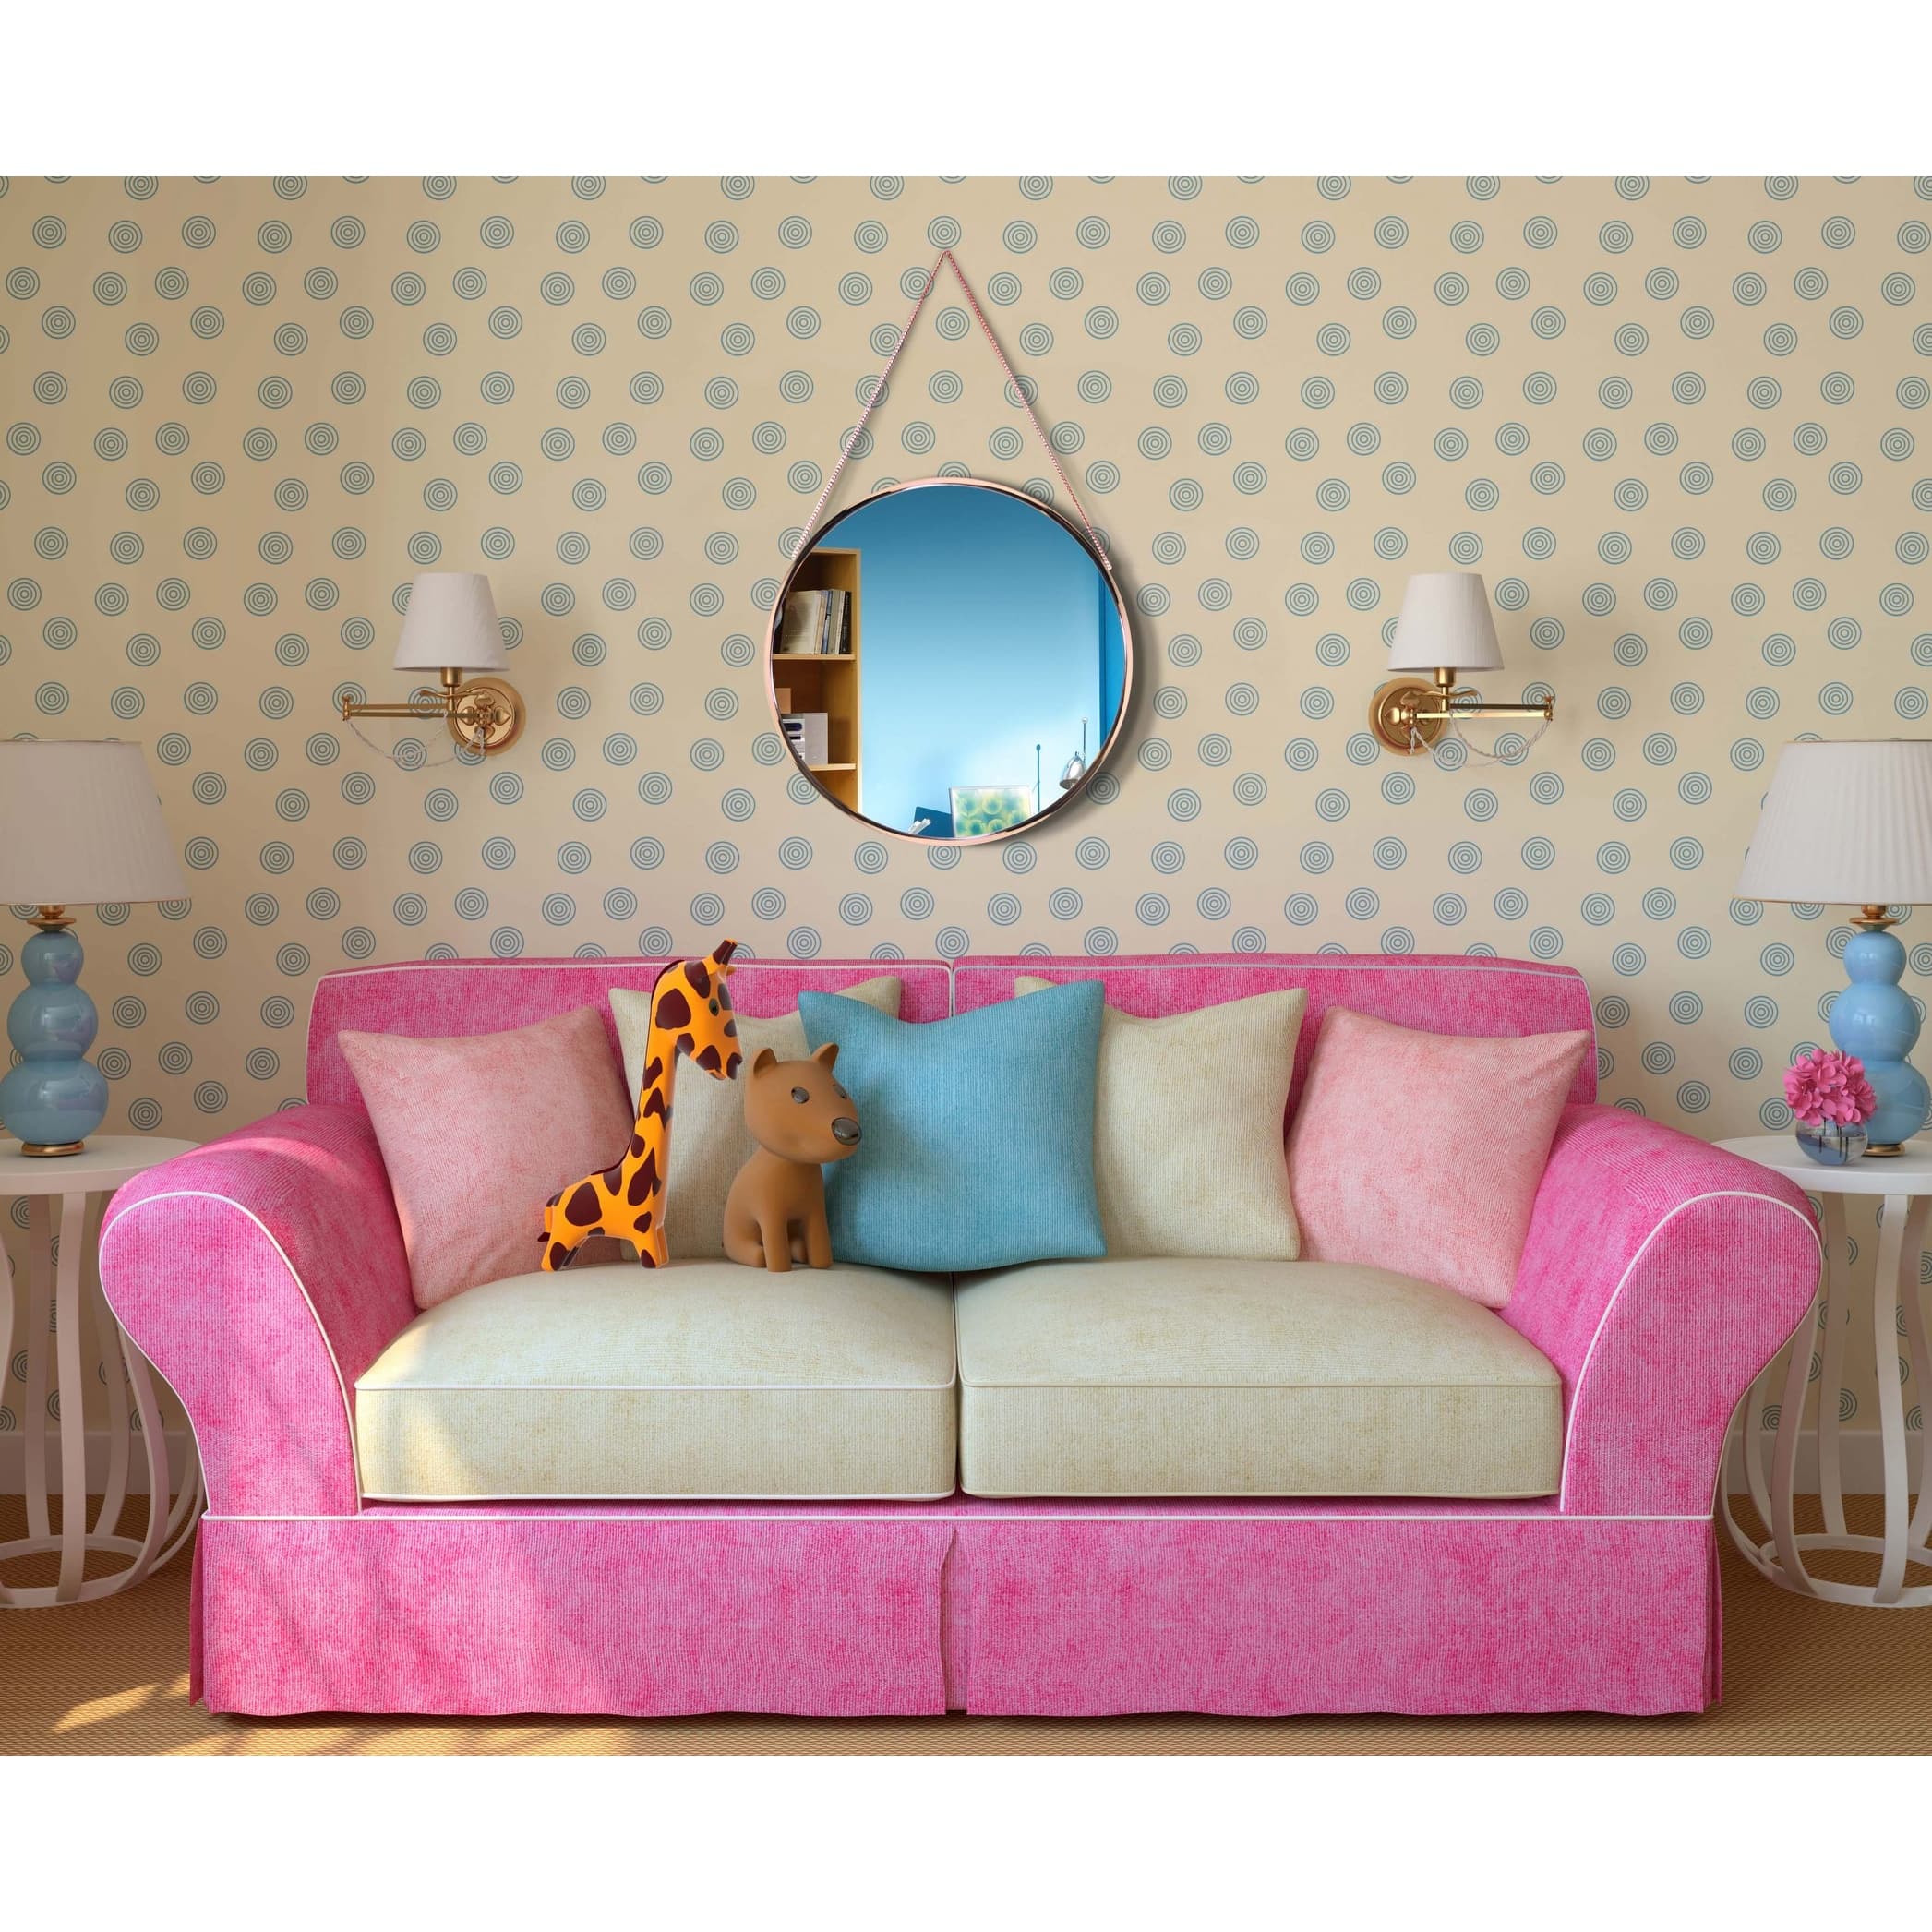 Carson Carrington Kabbo Pink Rose Gold Round Wall Mirror - 17.5 x 1.75 x 17.5